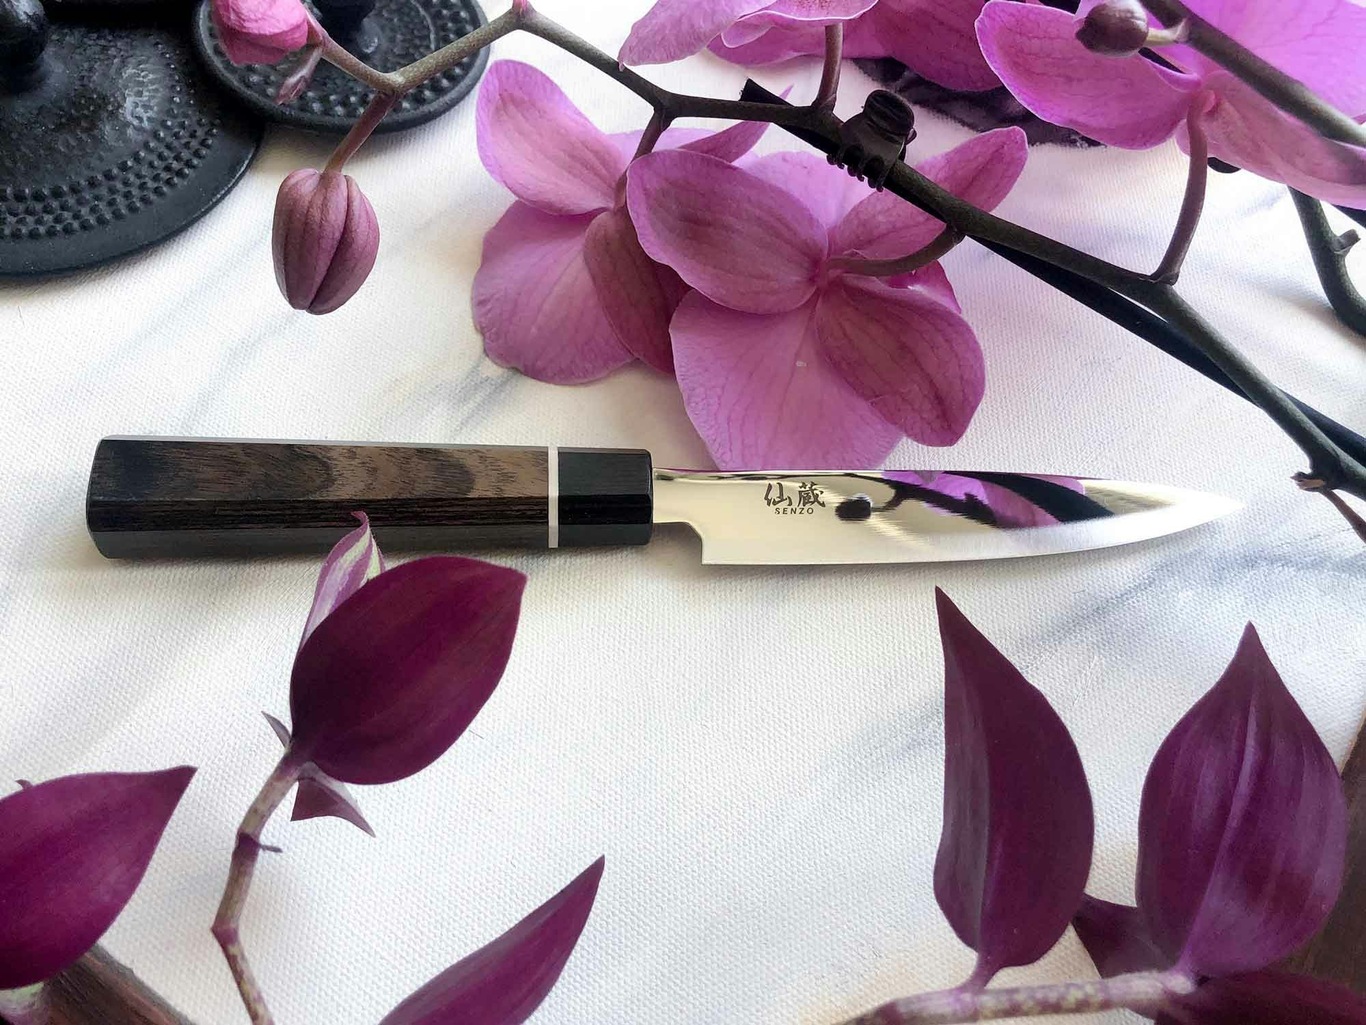 https://royaldesign.com/image/2/senzo-giniro-gyuto-paring-knife-12-cm-3?w=800&quality=80